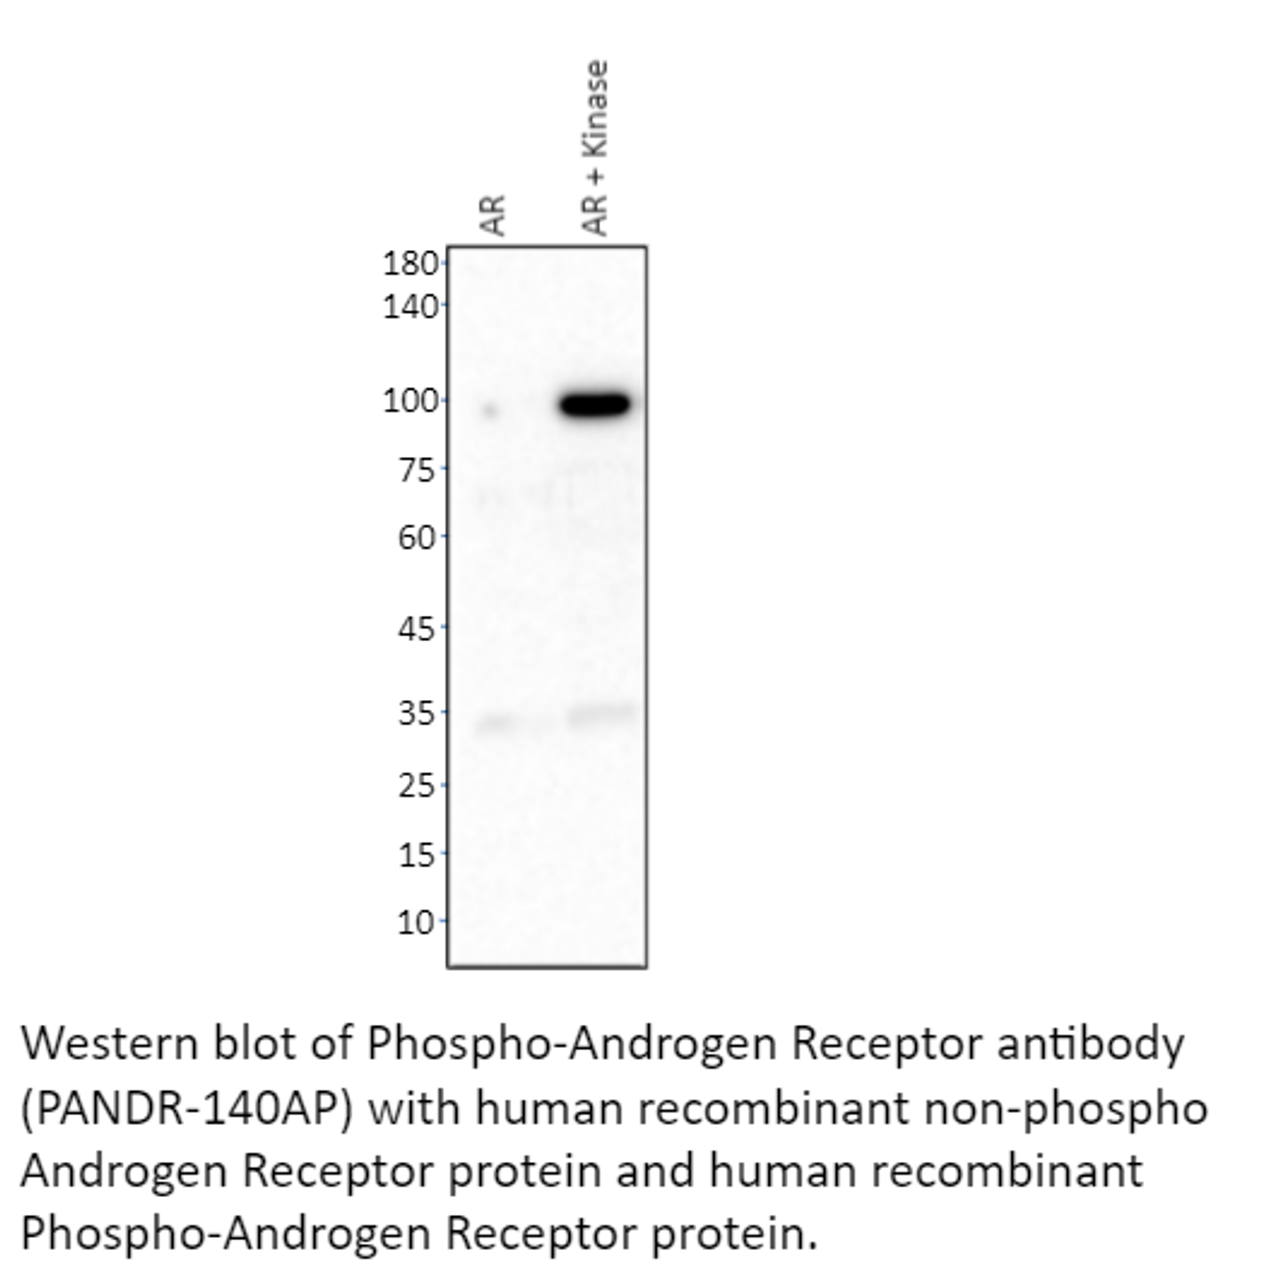 Phospho-Androgen Receptor Antibody from Fabgennix